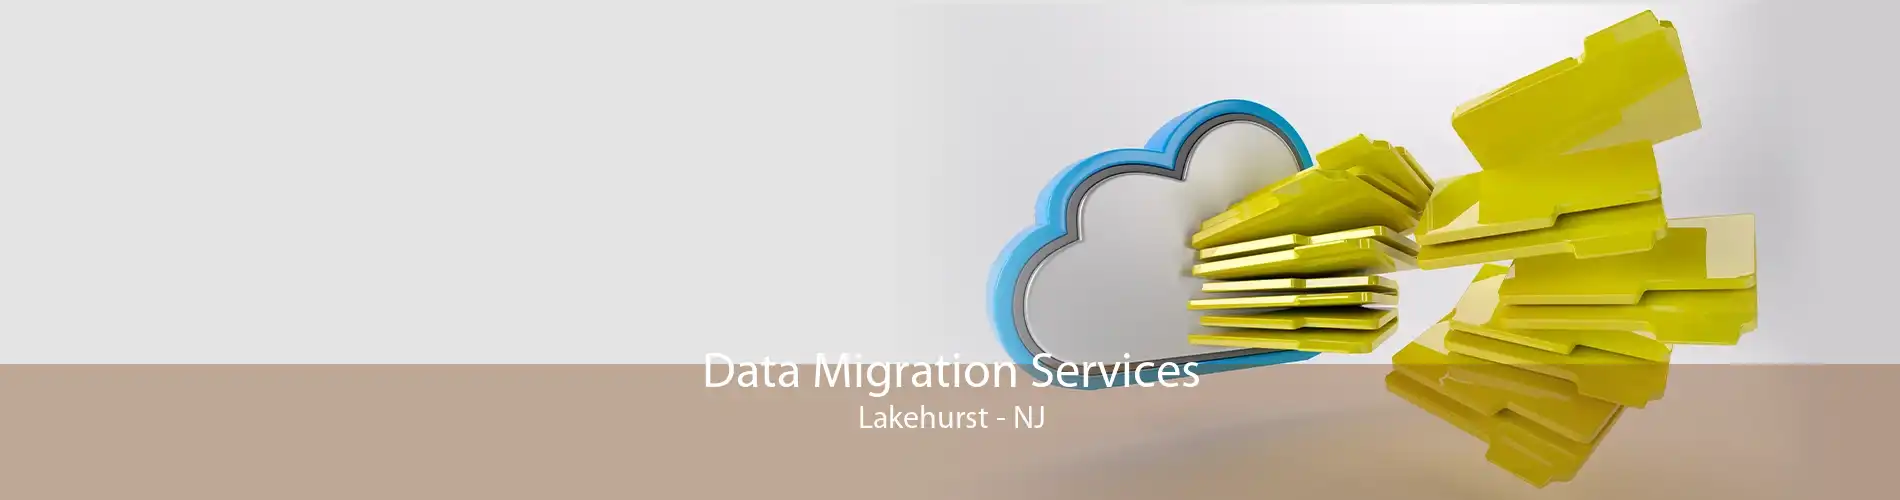 Data Migration Services Lakehurst - NJ